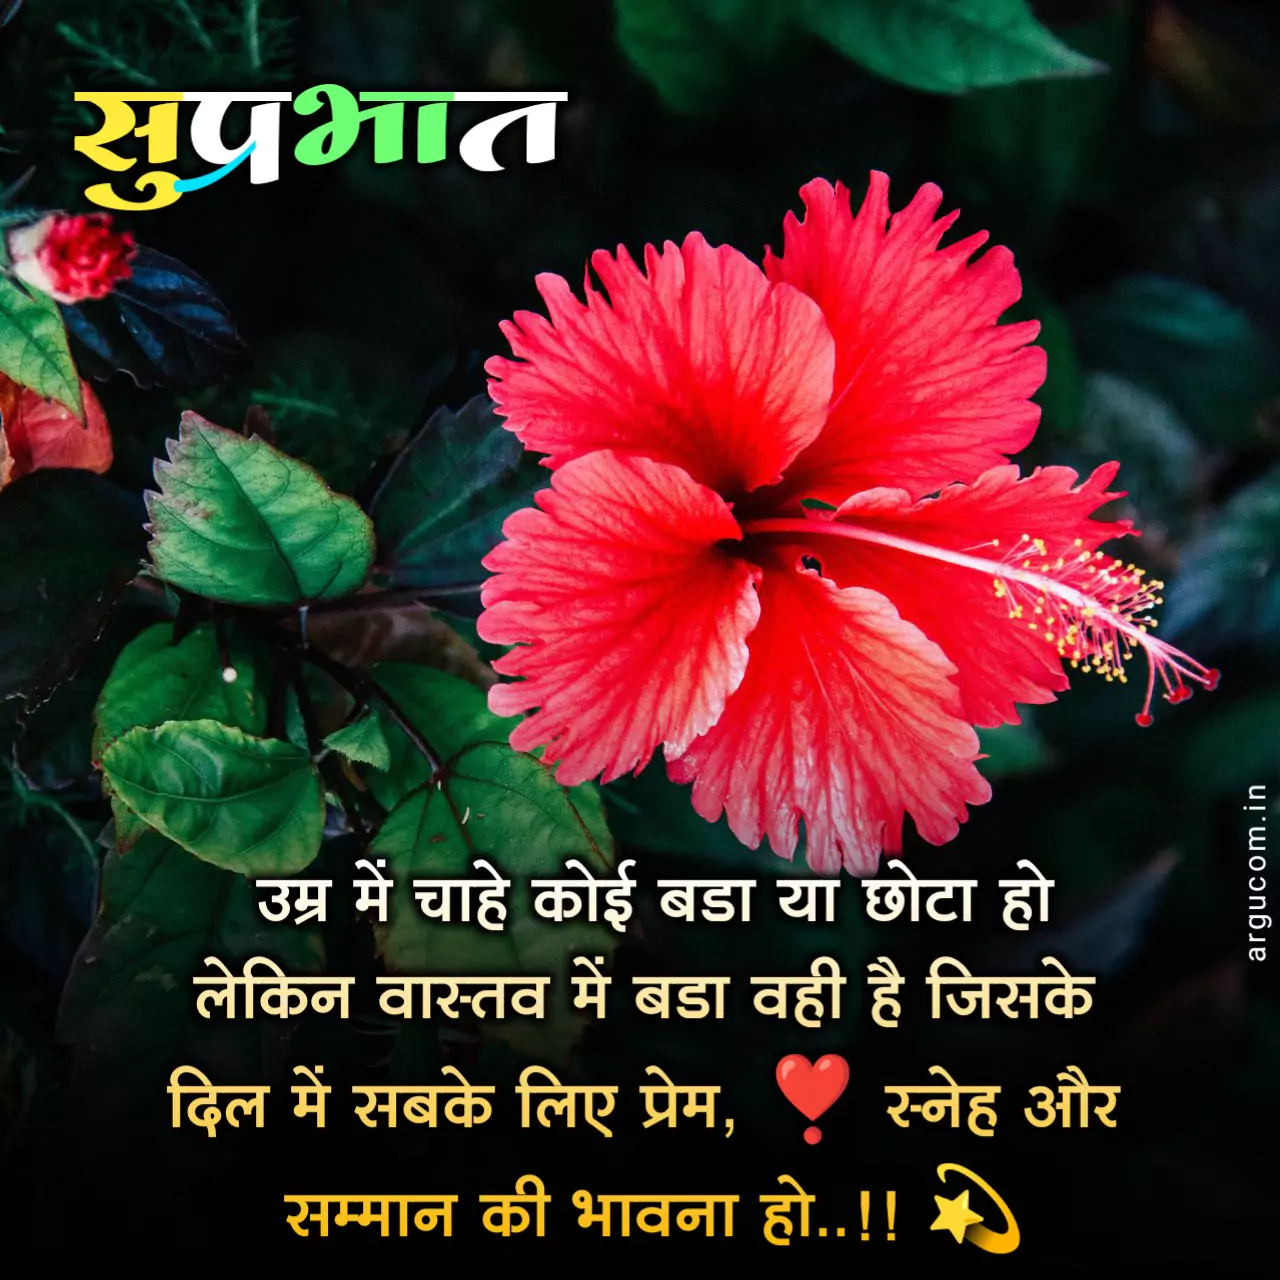 Good morning message in hindi